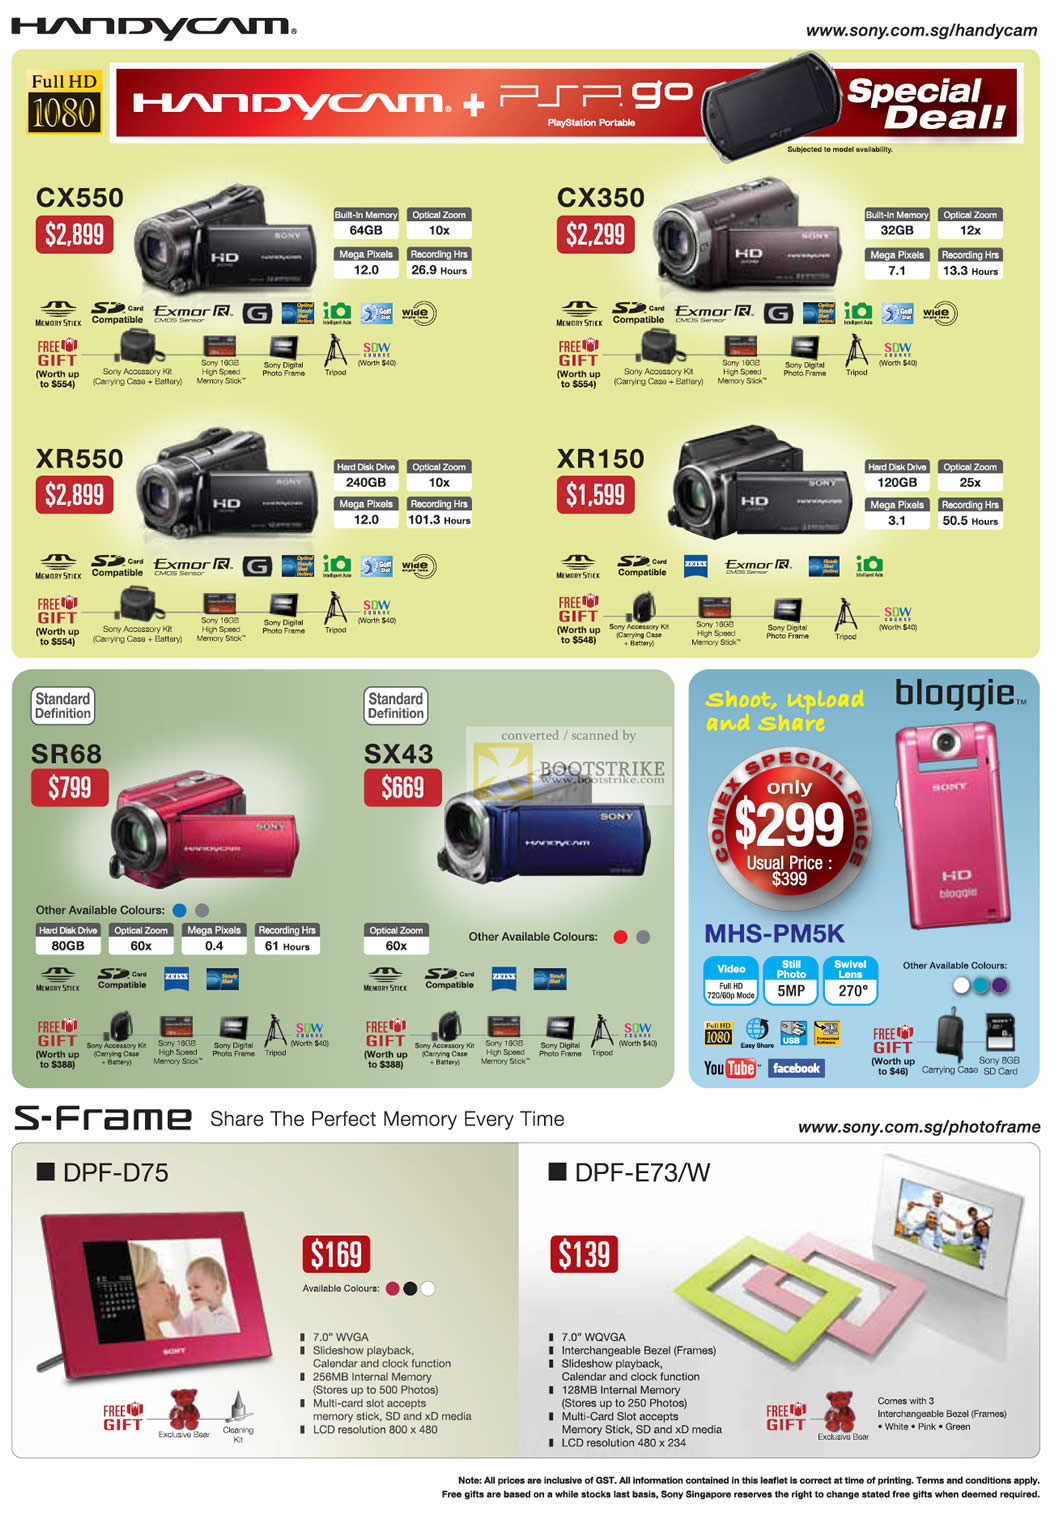 Comex 2010 price list image brochure of Sony Handycam Camcorders CX550 CX350 XR550 XR150 SR68 SX43 Digital Photo S Frame DPF D75 E73 W